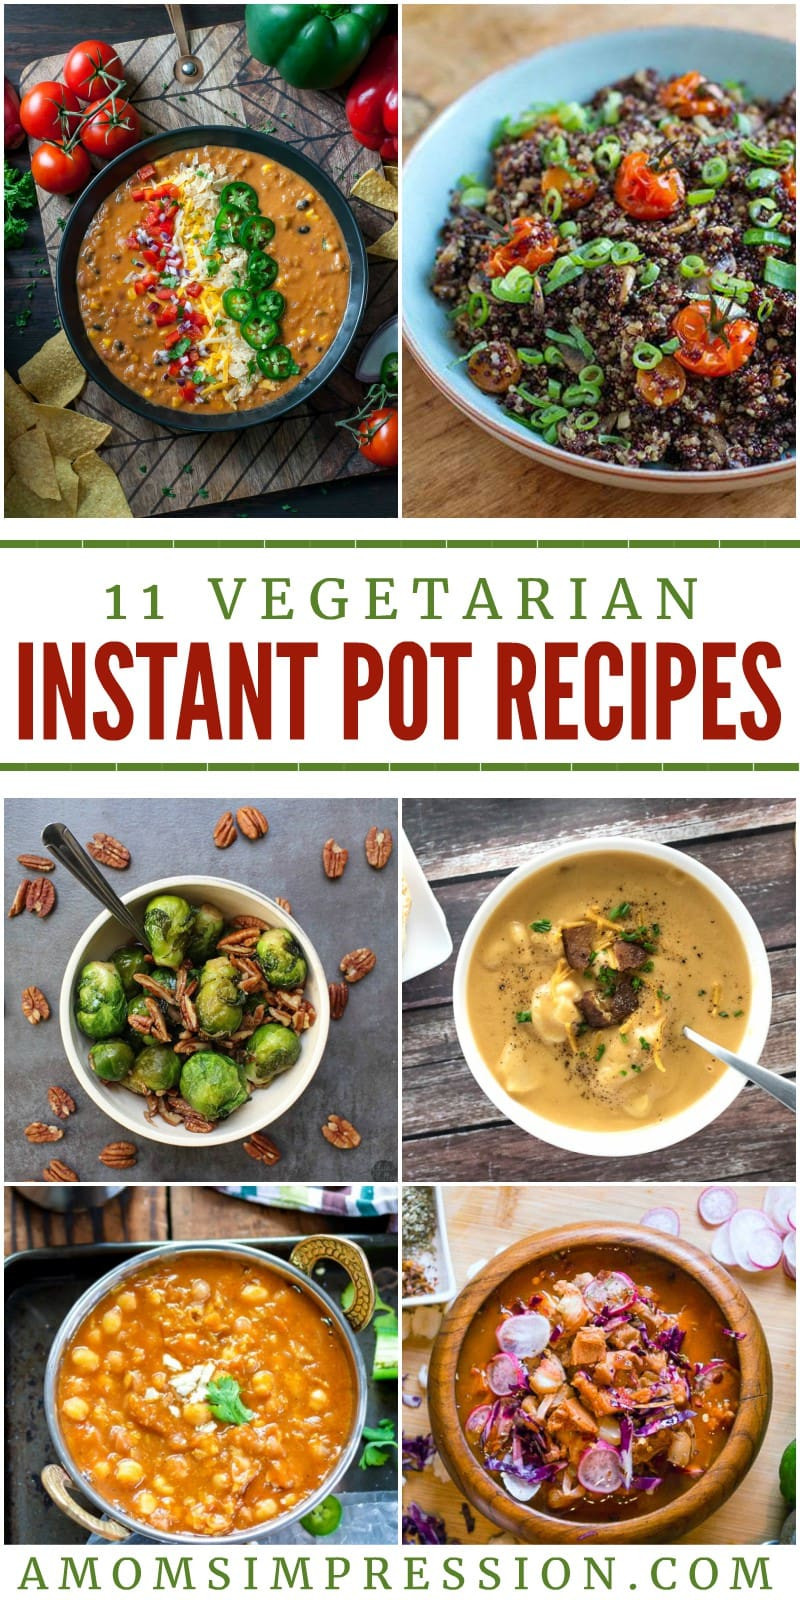 Instant Pot Vegetarian Indian Recipes
 11 Exciting Ve arian Instant Pot Recipes Everyone will Love